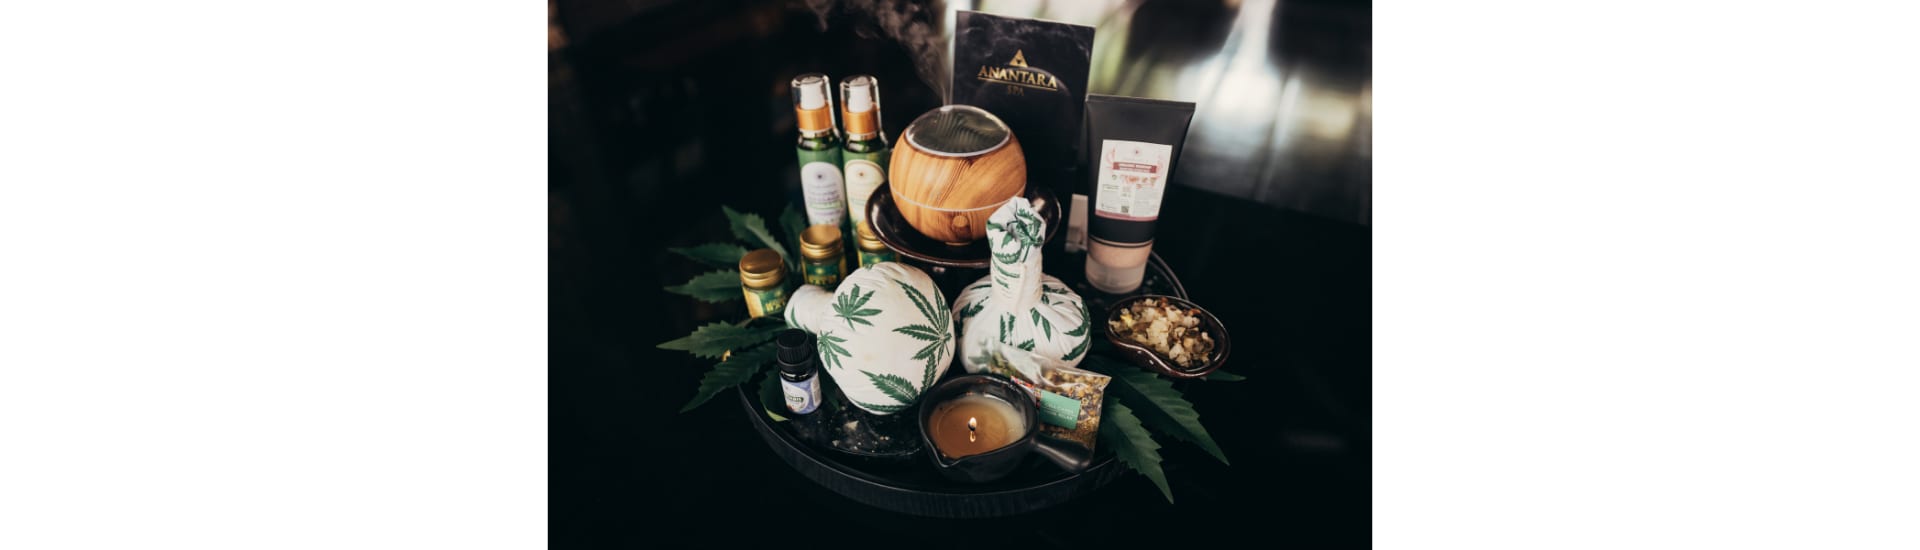 Anantara Spa Launches First Cannabis Infused Treatment Menu In Thailand